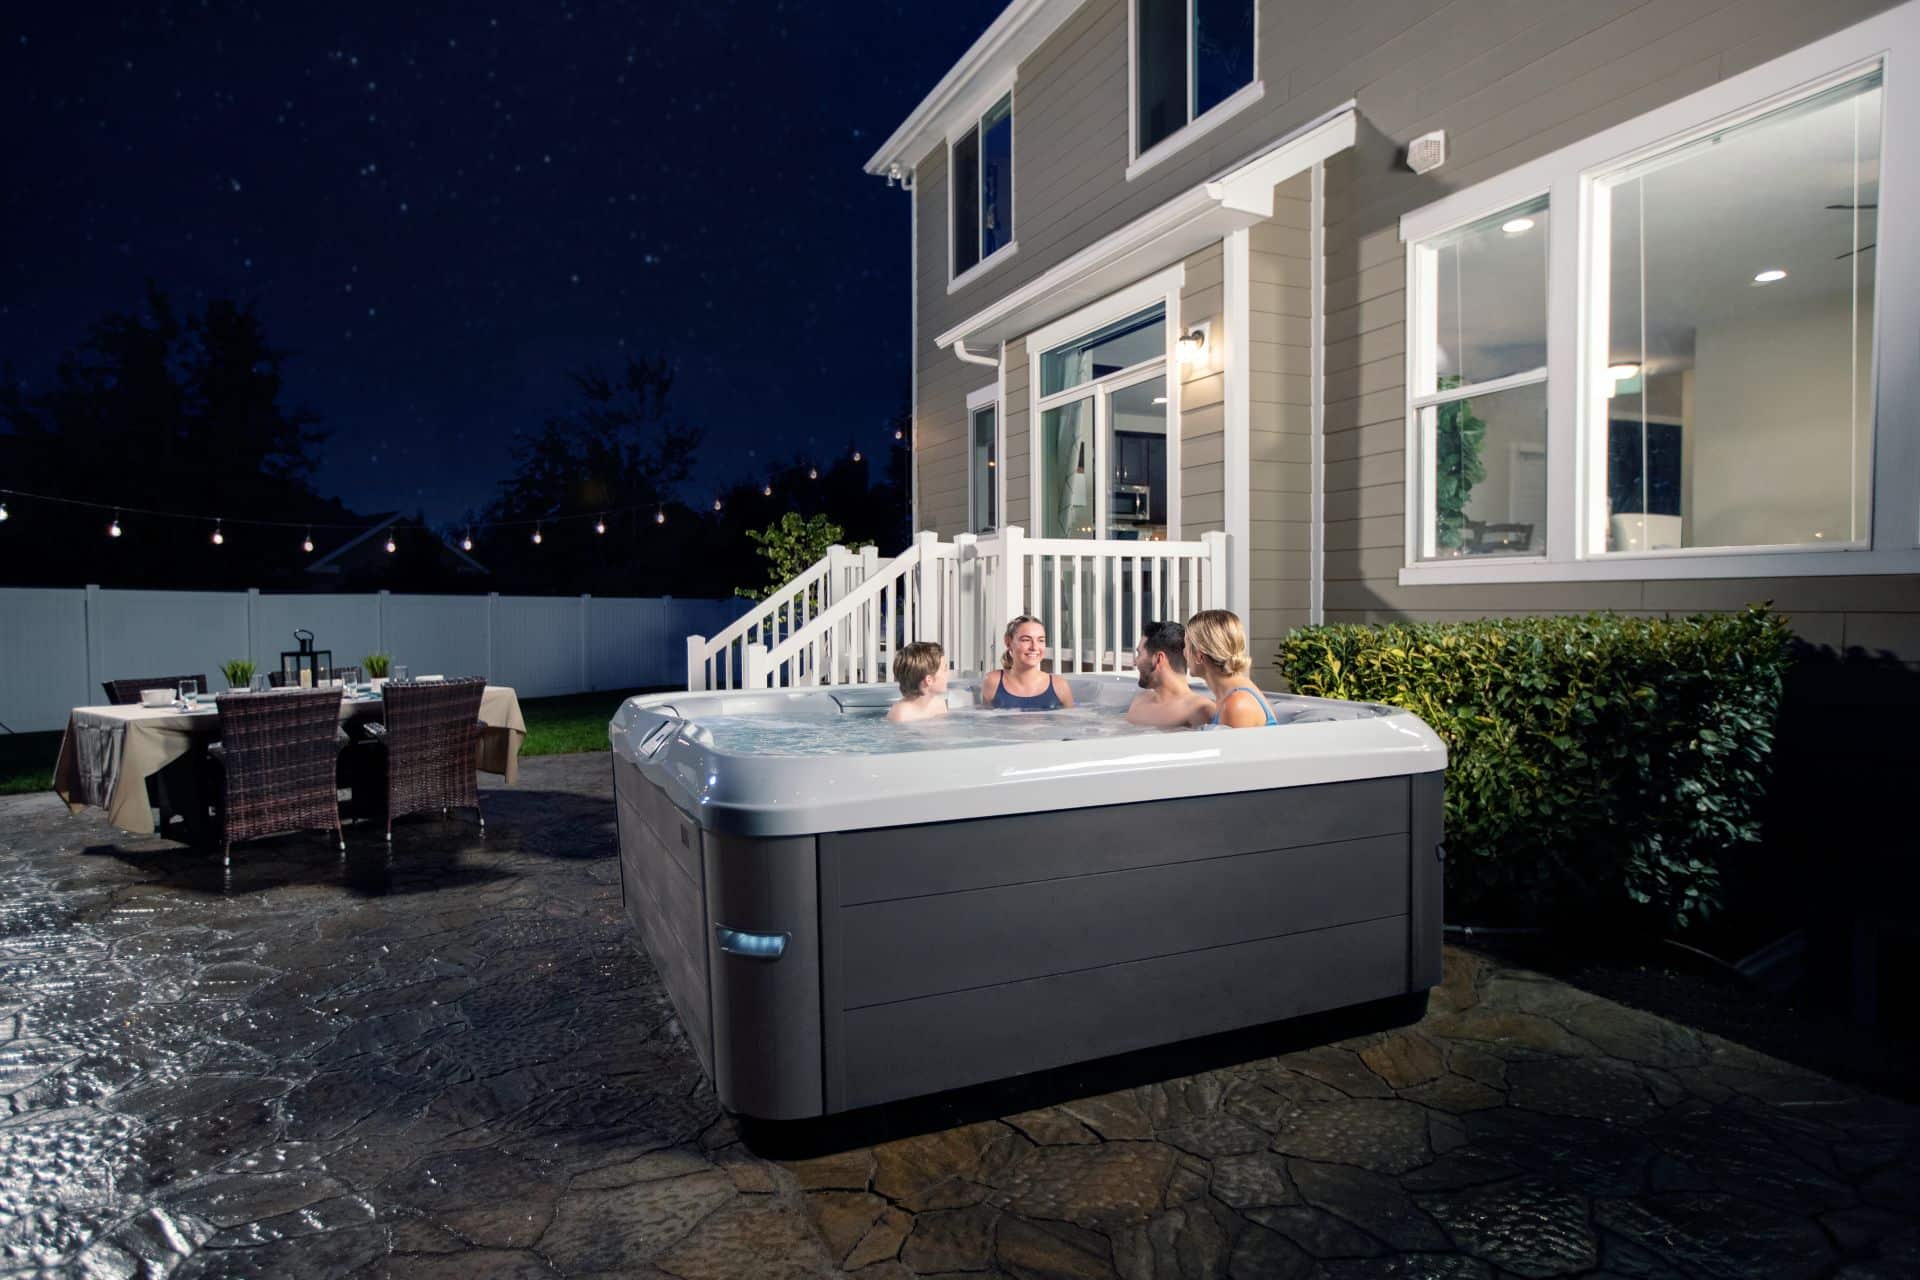 people enjoying an outdoor hot tub at night